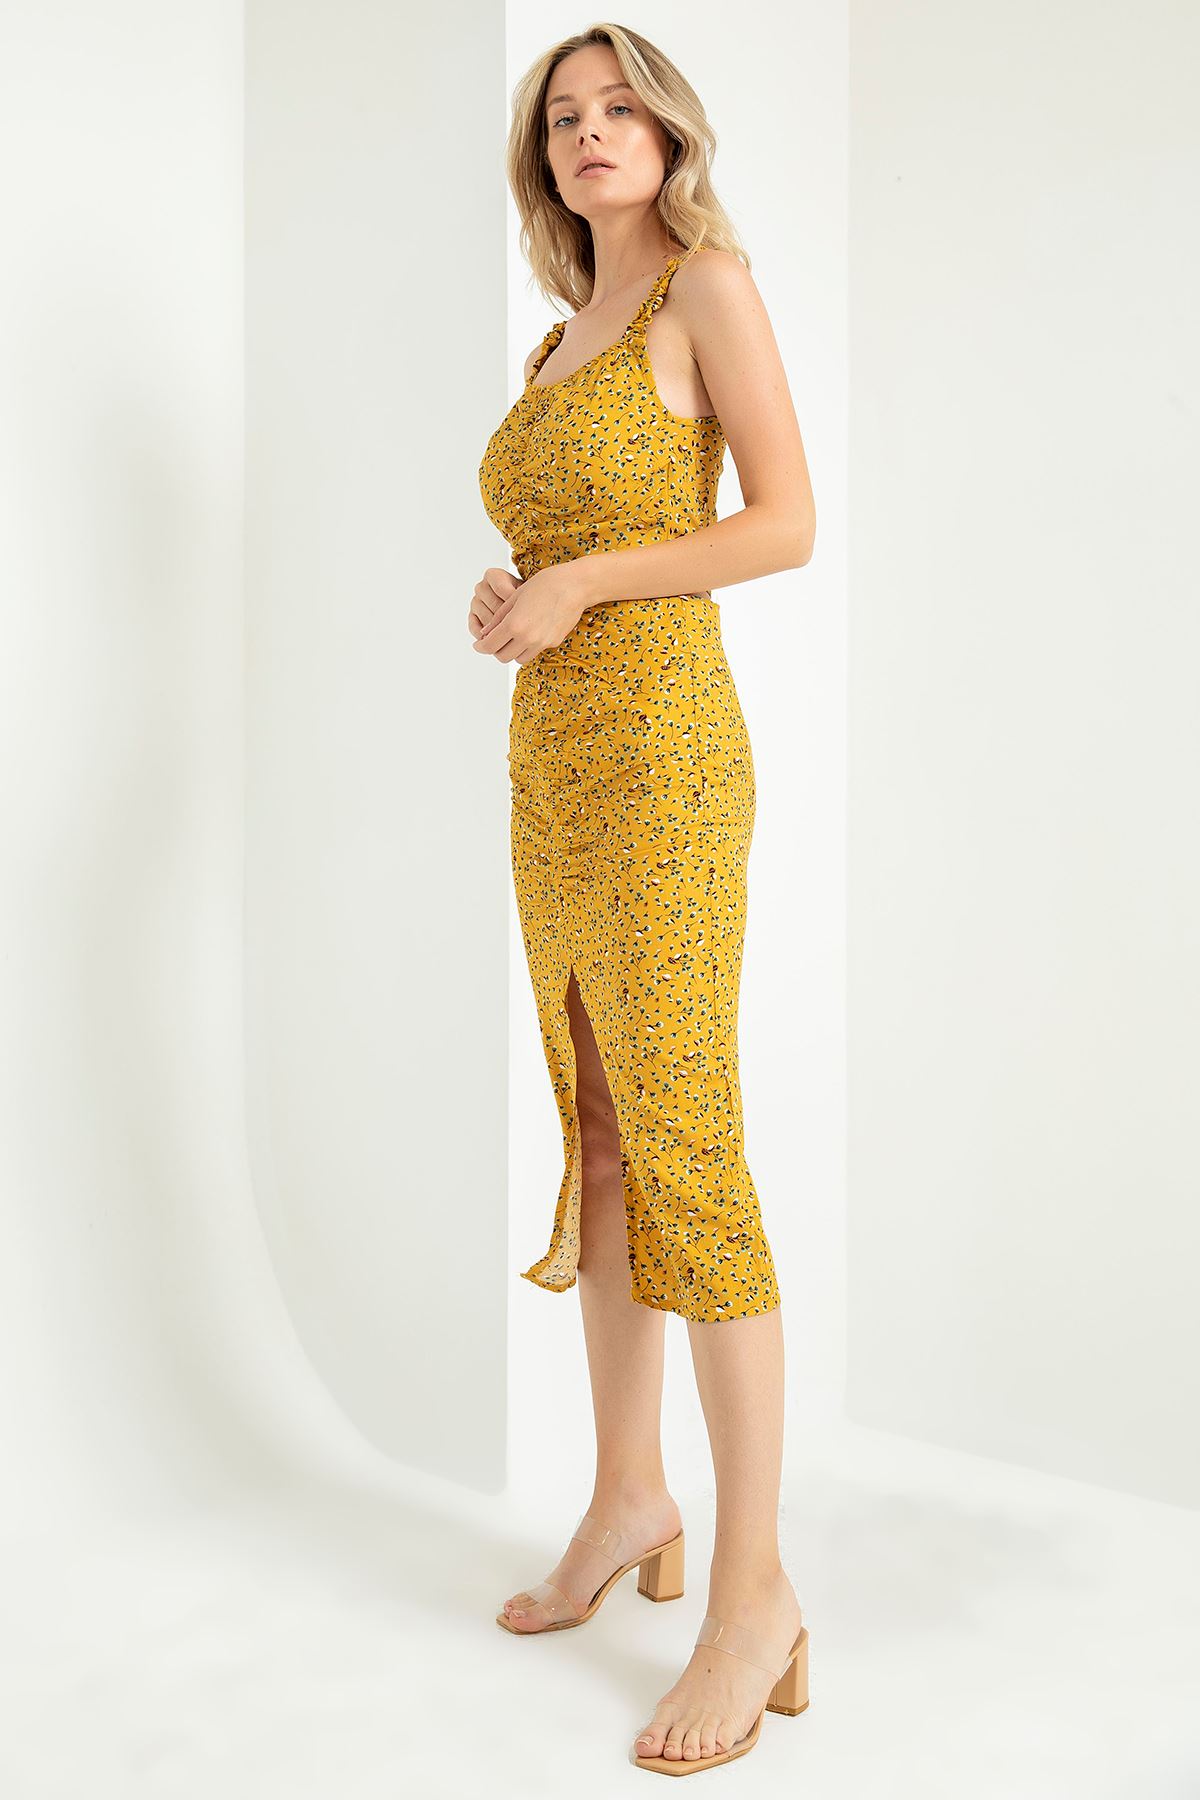 Below Knee Straight Crispy Floral Print Shirred Women'S Skirt - Mustard